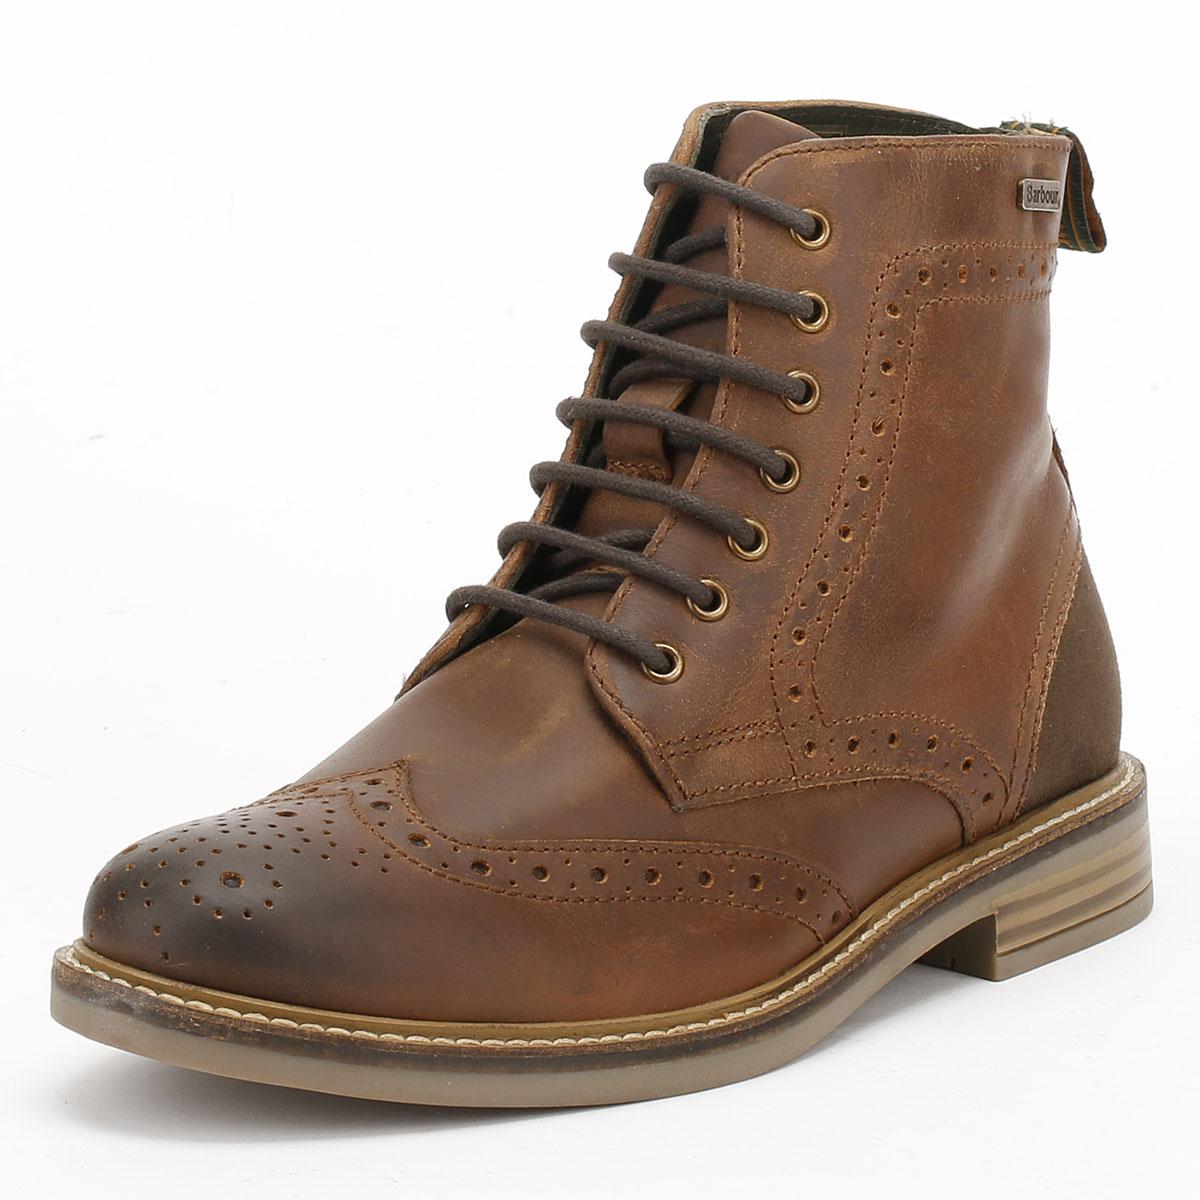 Lyst - Barbour Belsay Mens Boots in Brown for Men